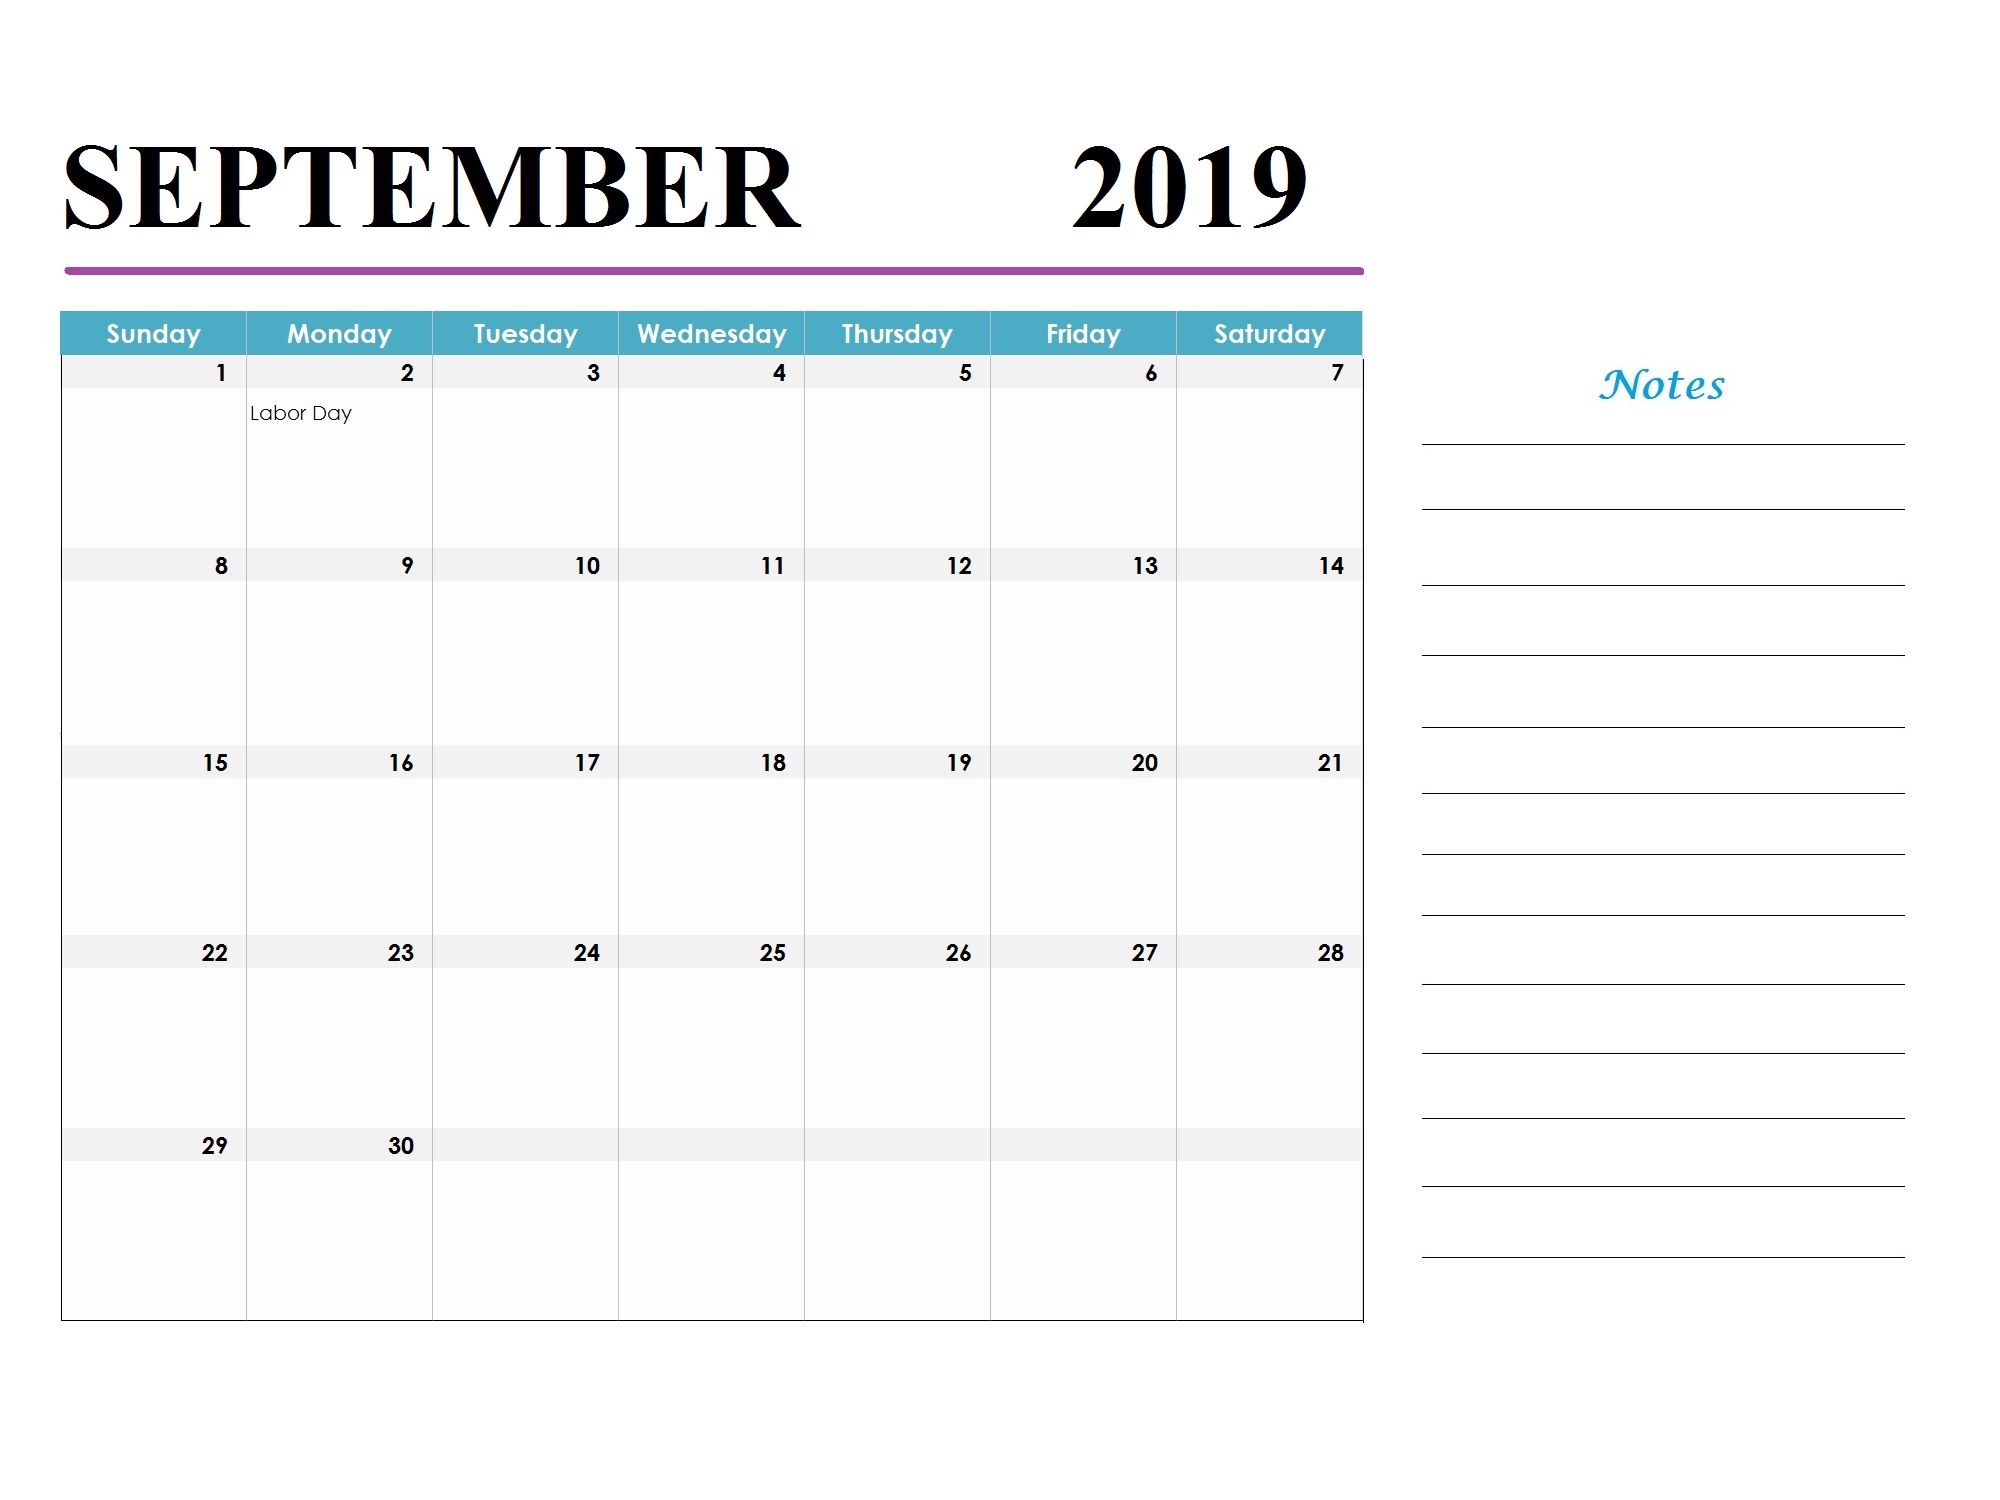 September 2019 Holidays Calendar Template